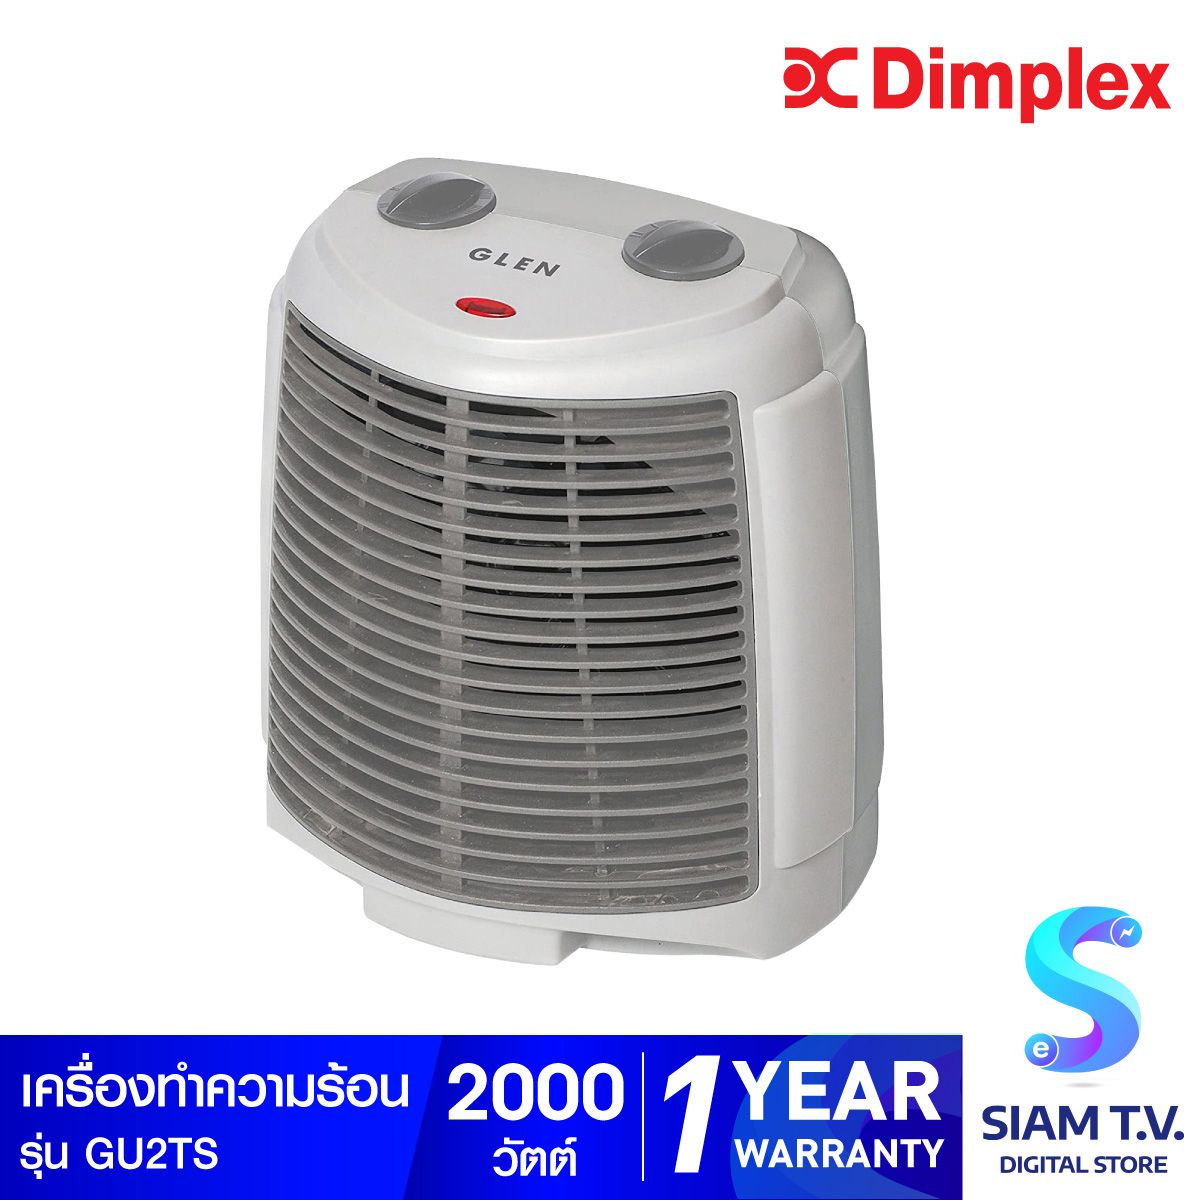 DIMPLEX เครื่องทำความร้อน GLEN Fan Heater DIMPLEX รุ่น GU2TS